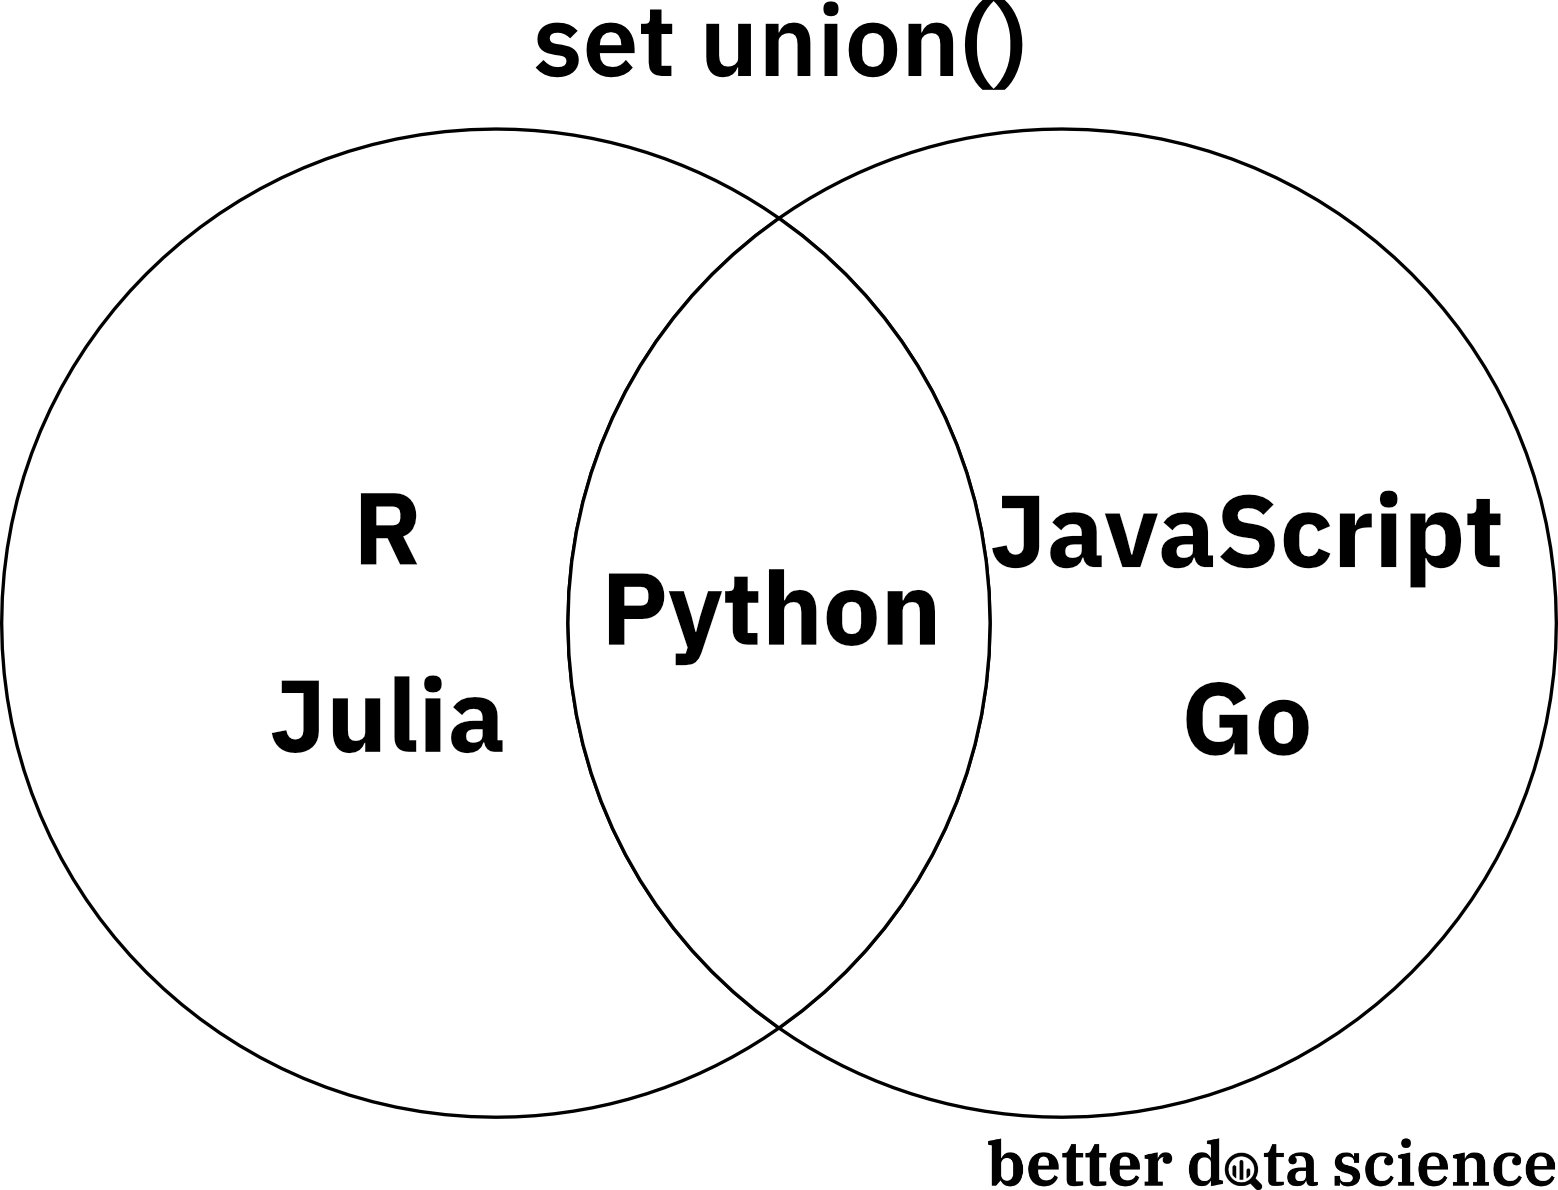 Image 3 - Python set union as a Venn diagram (image by author)